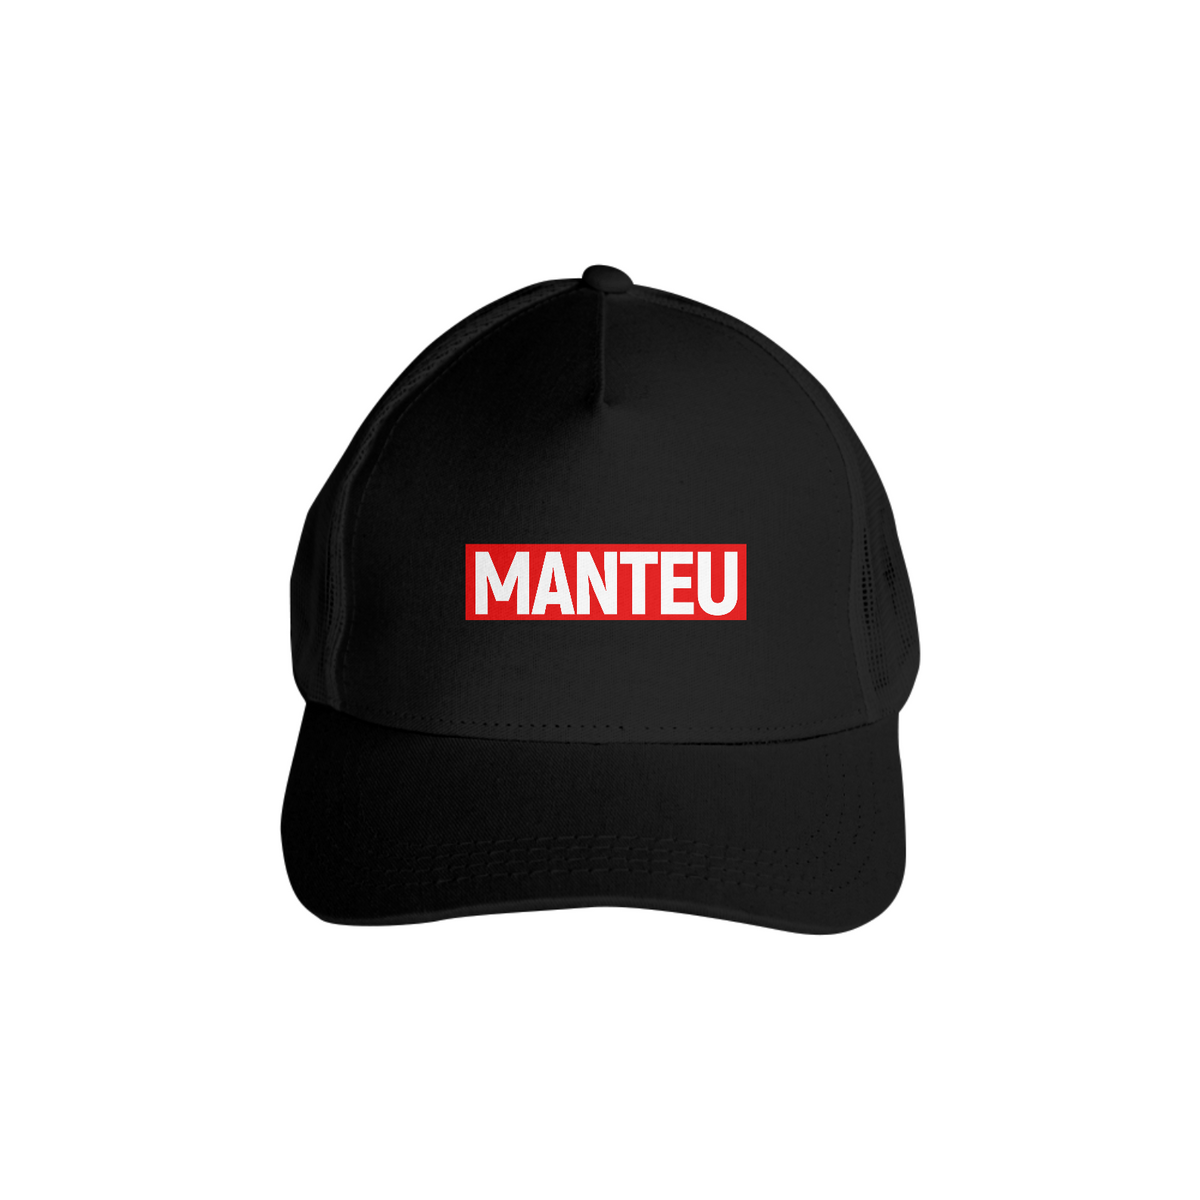 Nome do produto: MANTEU